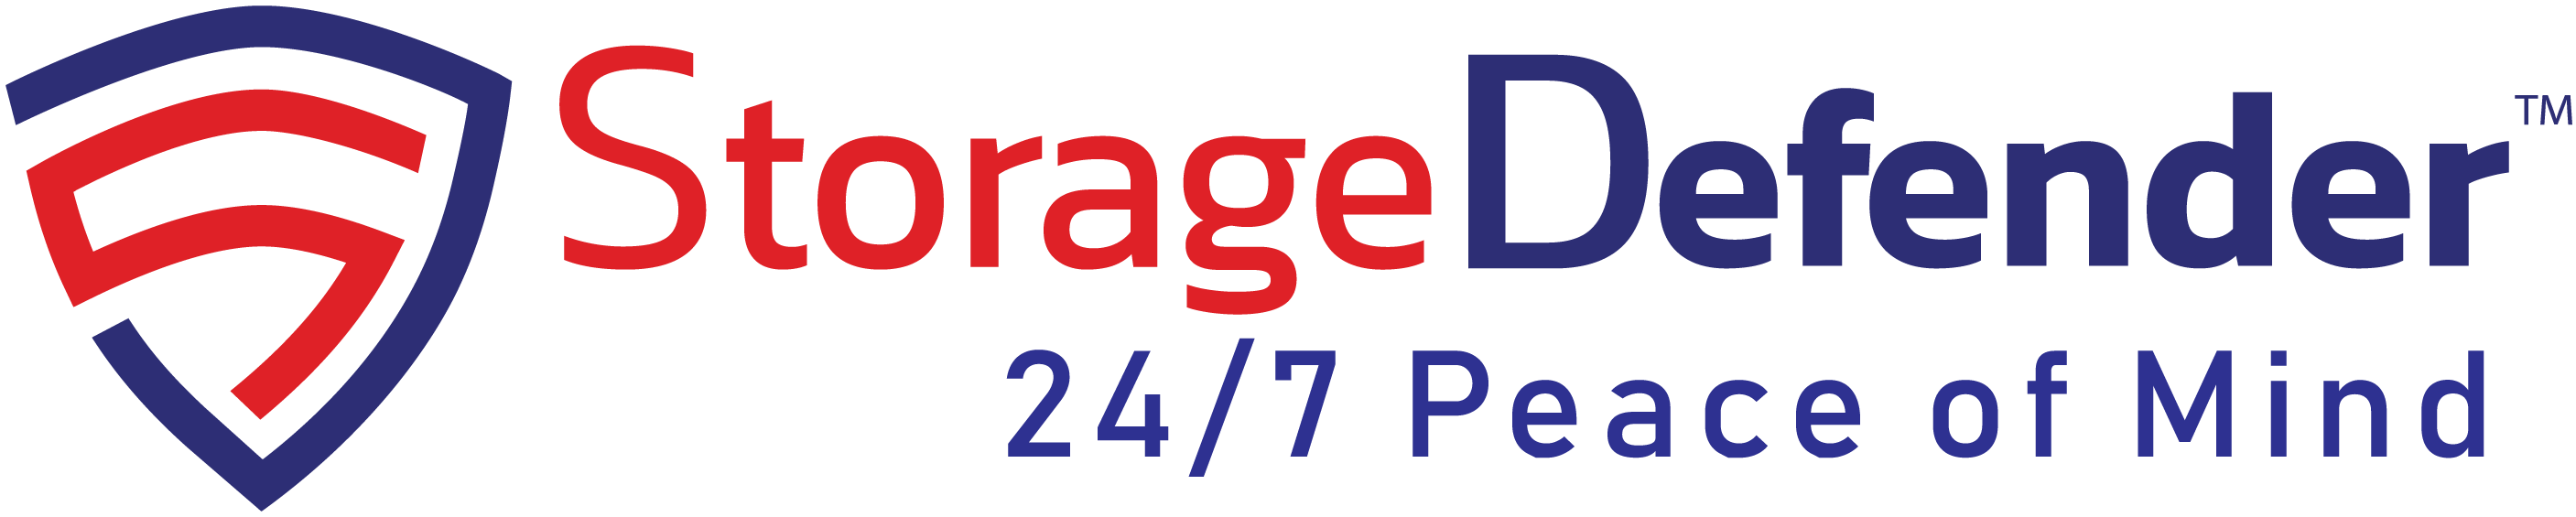 storage defender logo